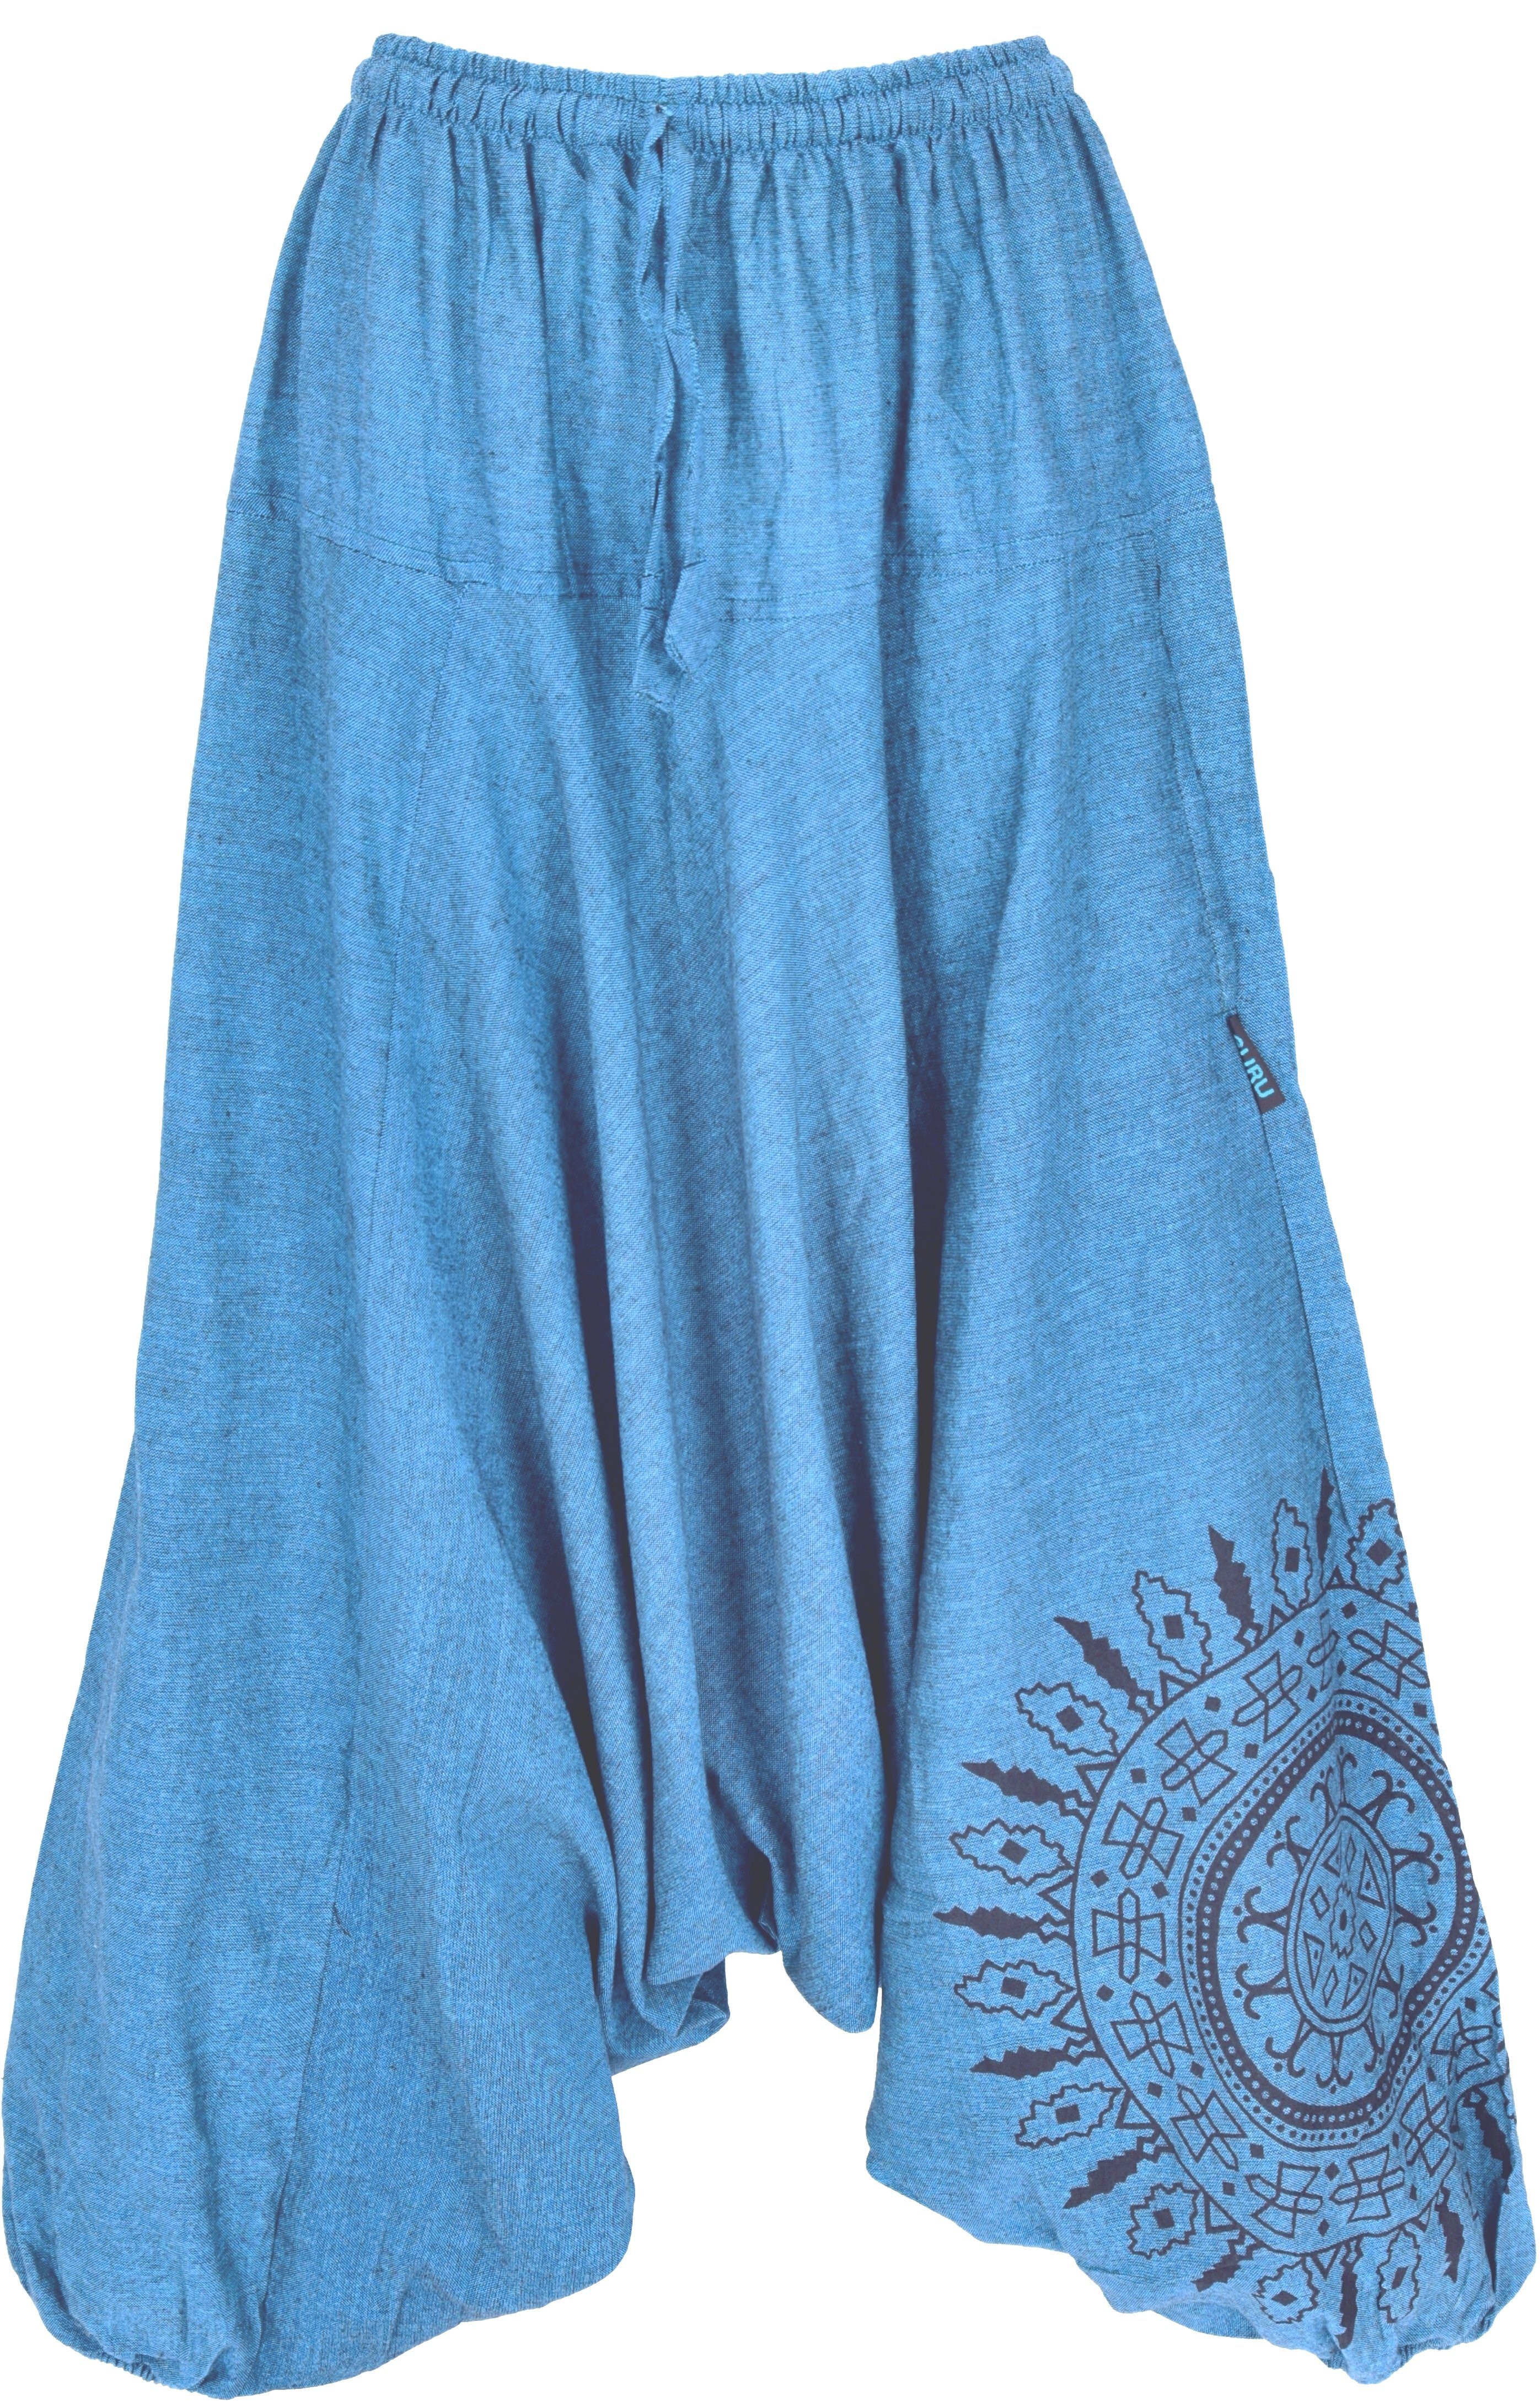 Guru-Shop Bekleidung blau Style, mit Pluderhose, Ethno alternative Relaxhose Mandala,.. Pumphose Haremshose